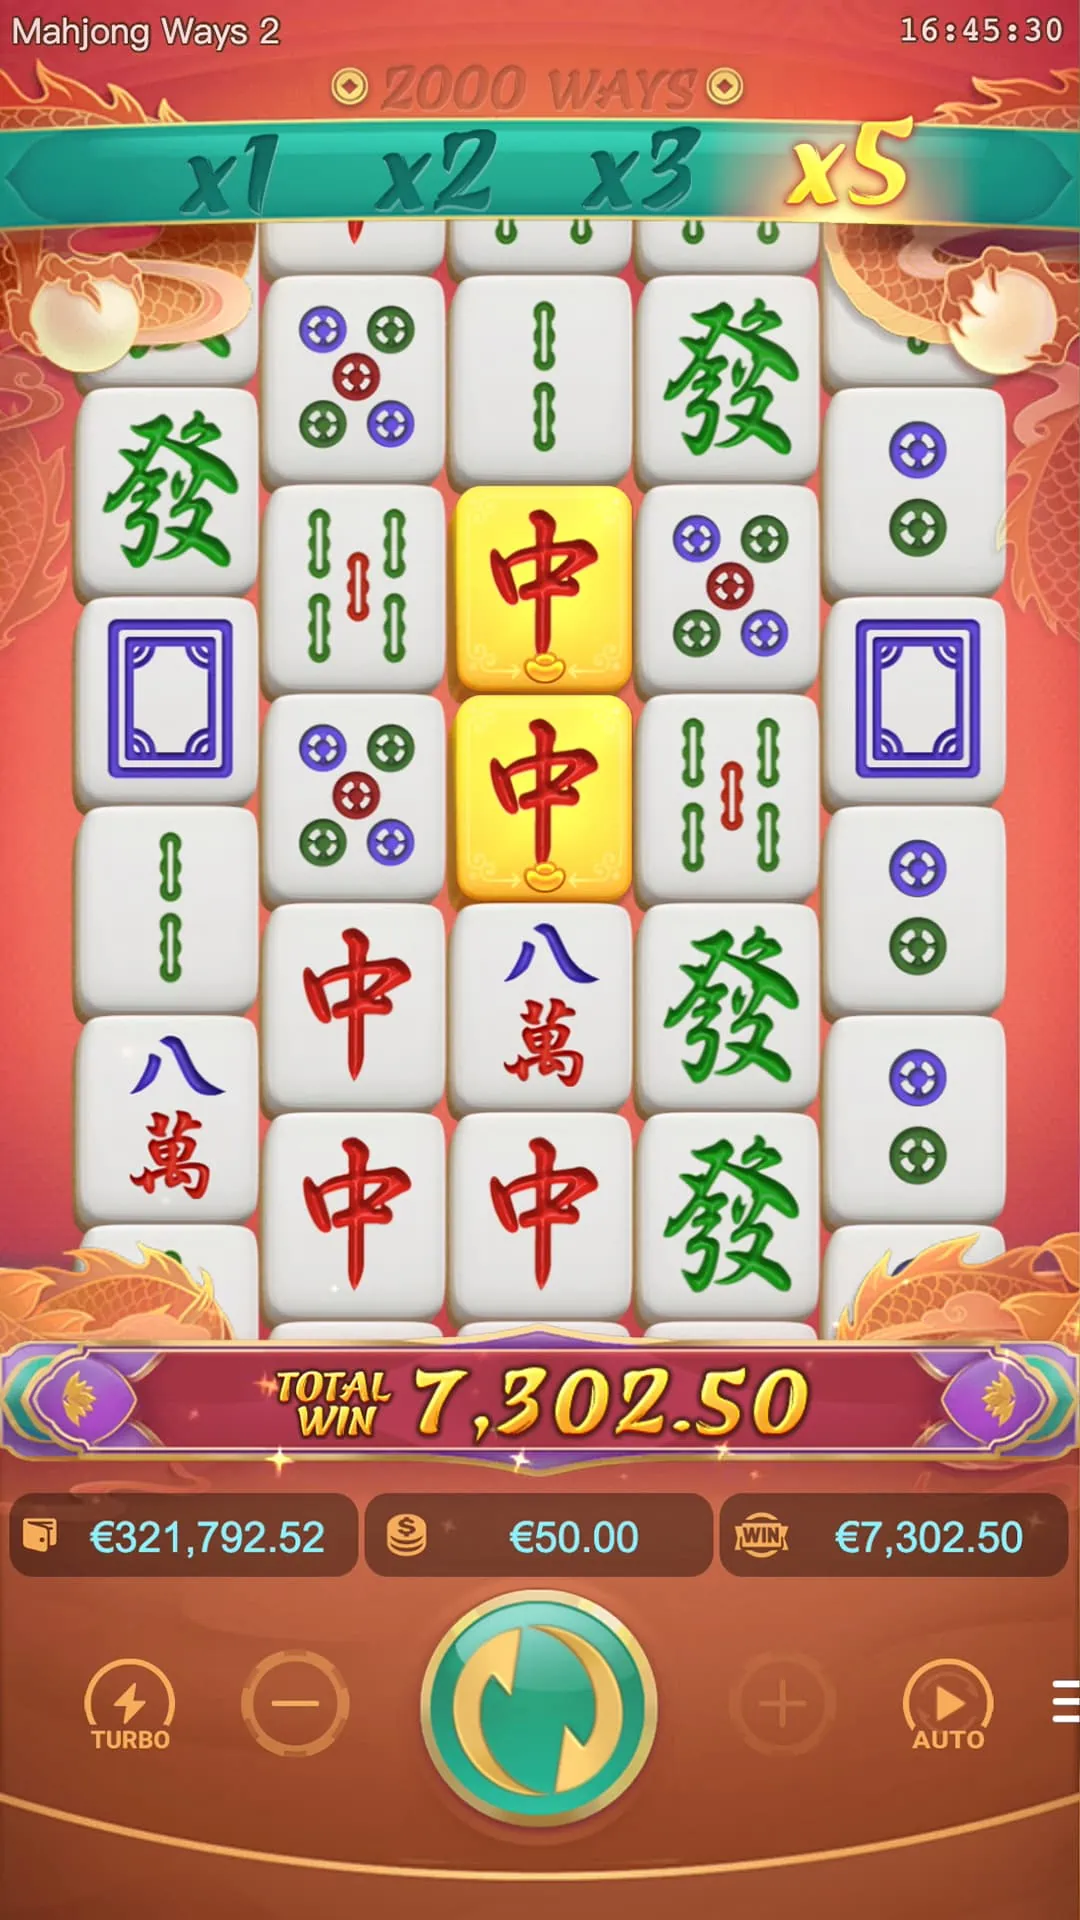 Mahjong Ways 2 Sclover lady 2